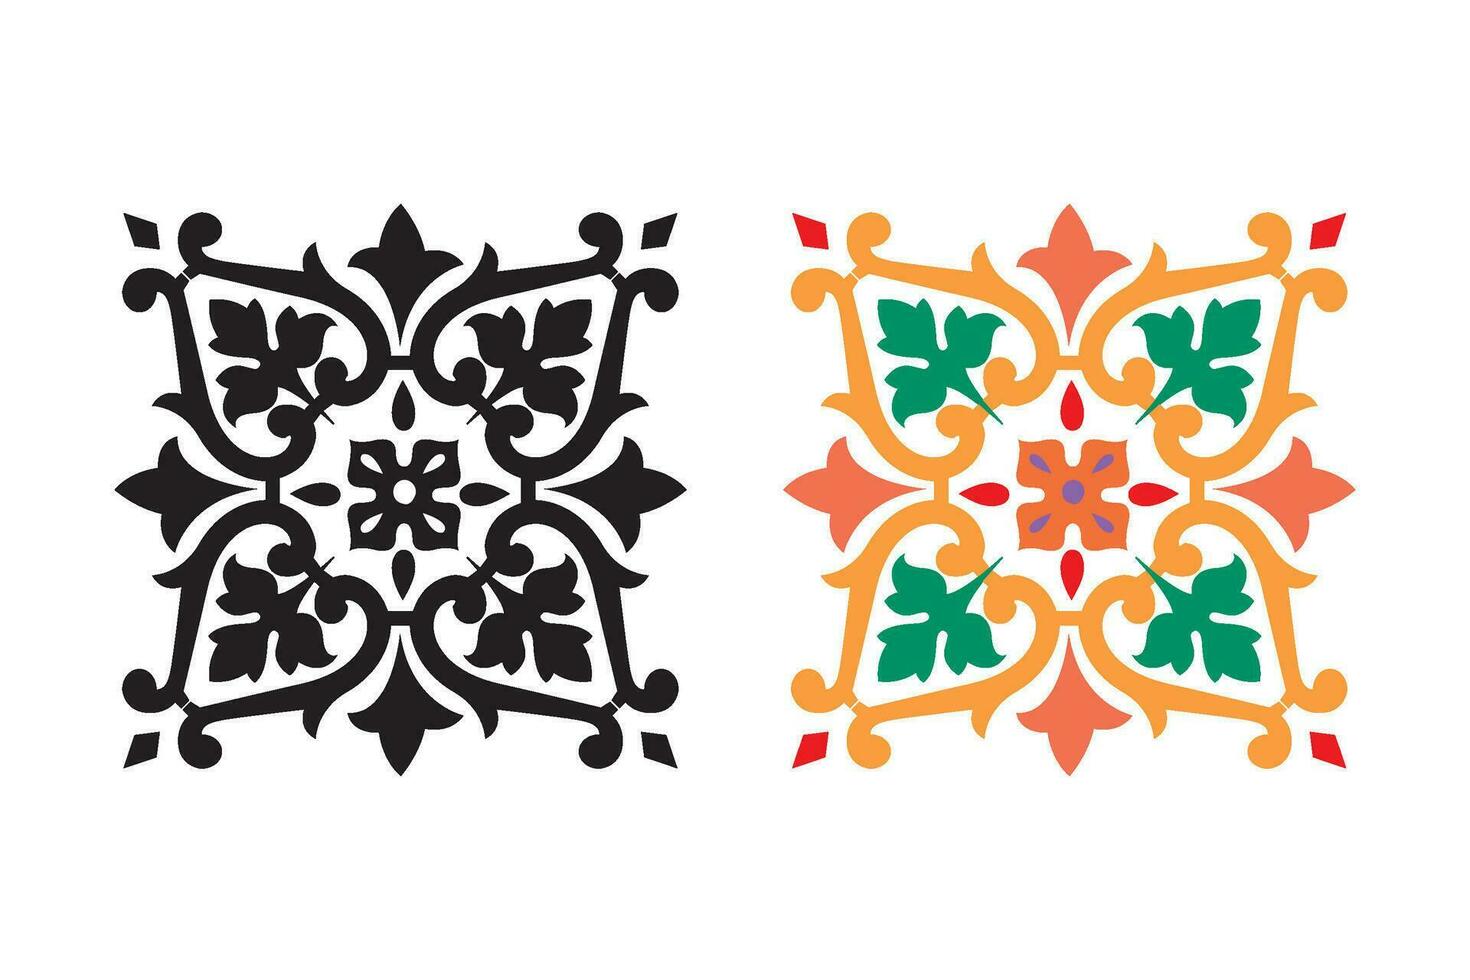 Vintage floral calligraphic floral vignette scroll corners ornamental design elements black set isolated vector